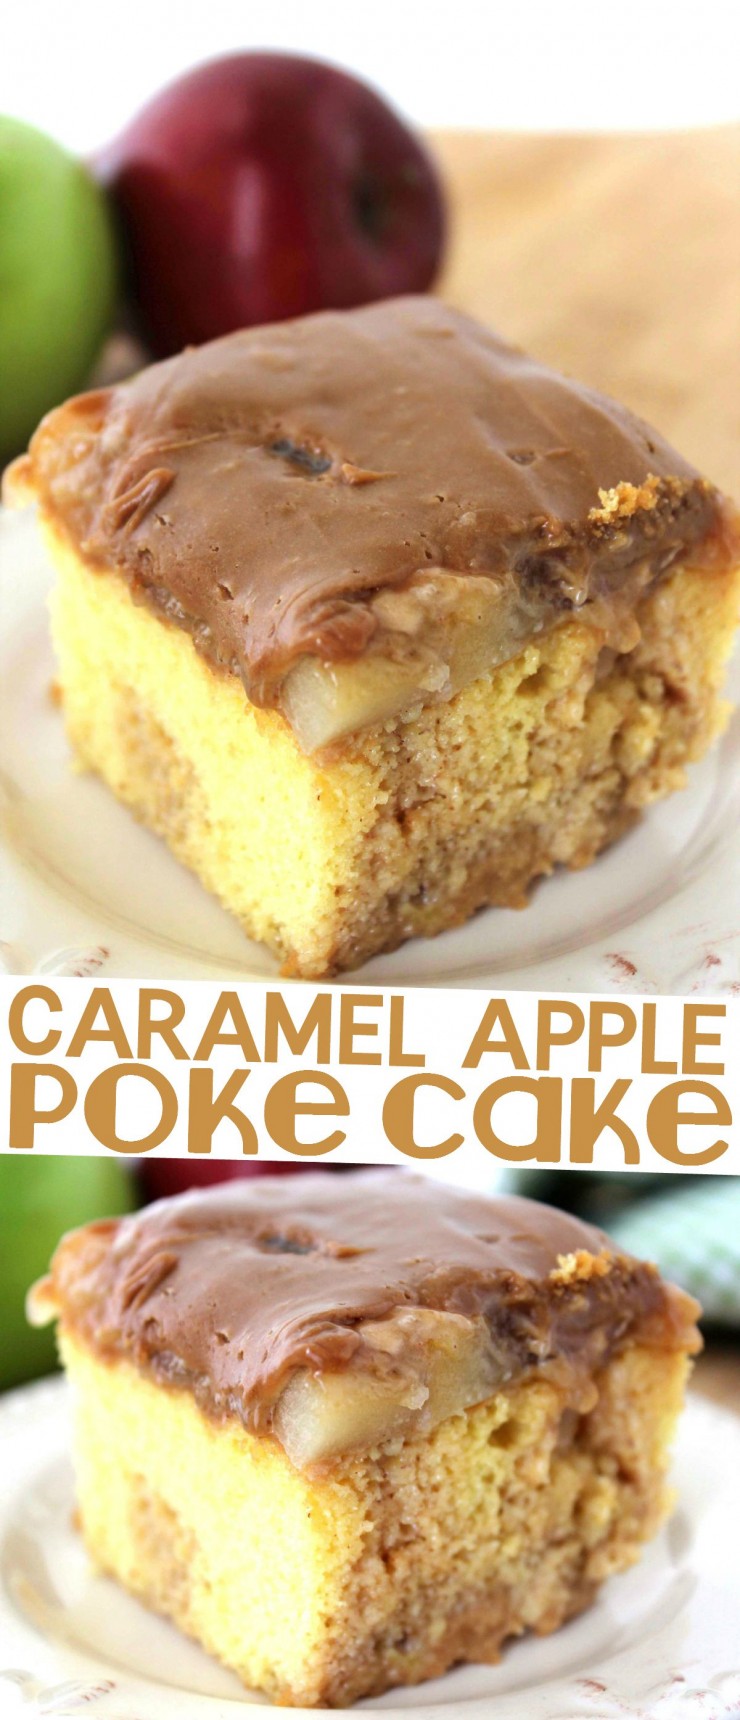 This Caramel Apple Poke Cake is a perfect autumn dessert recipe!